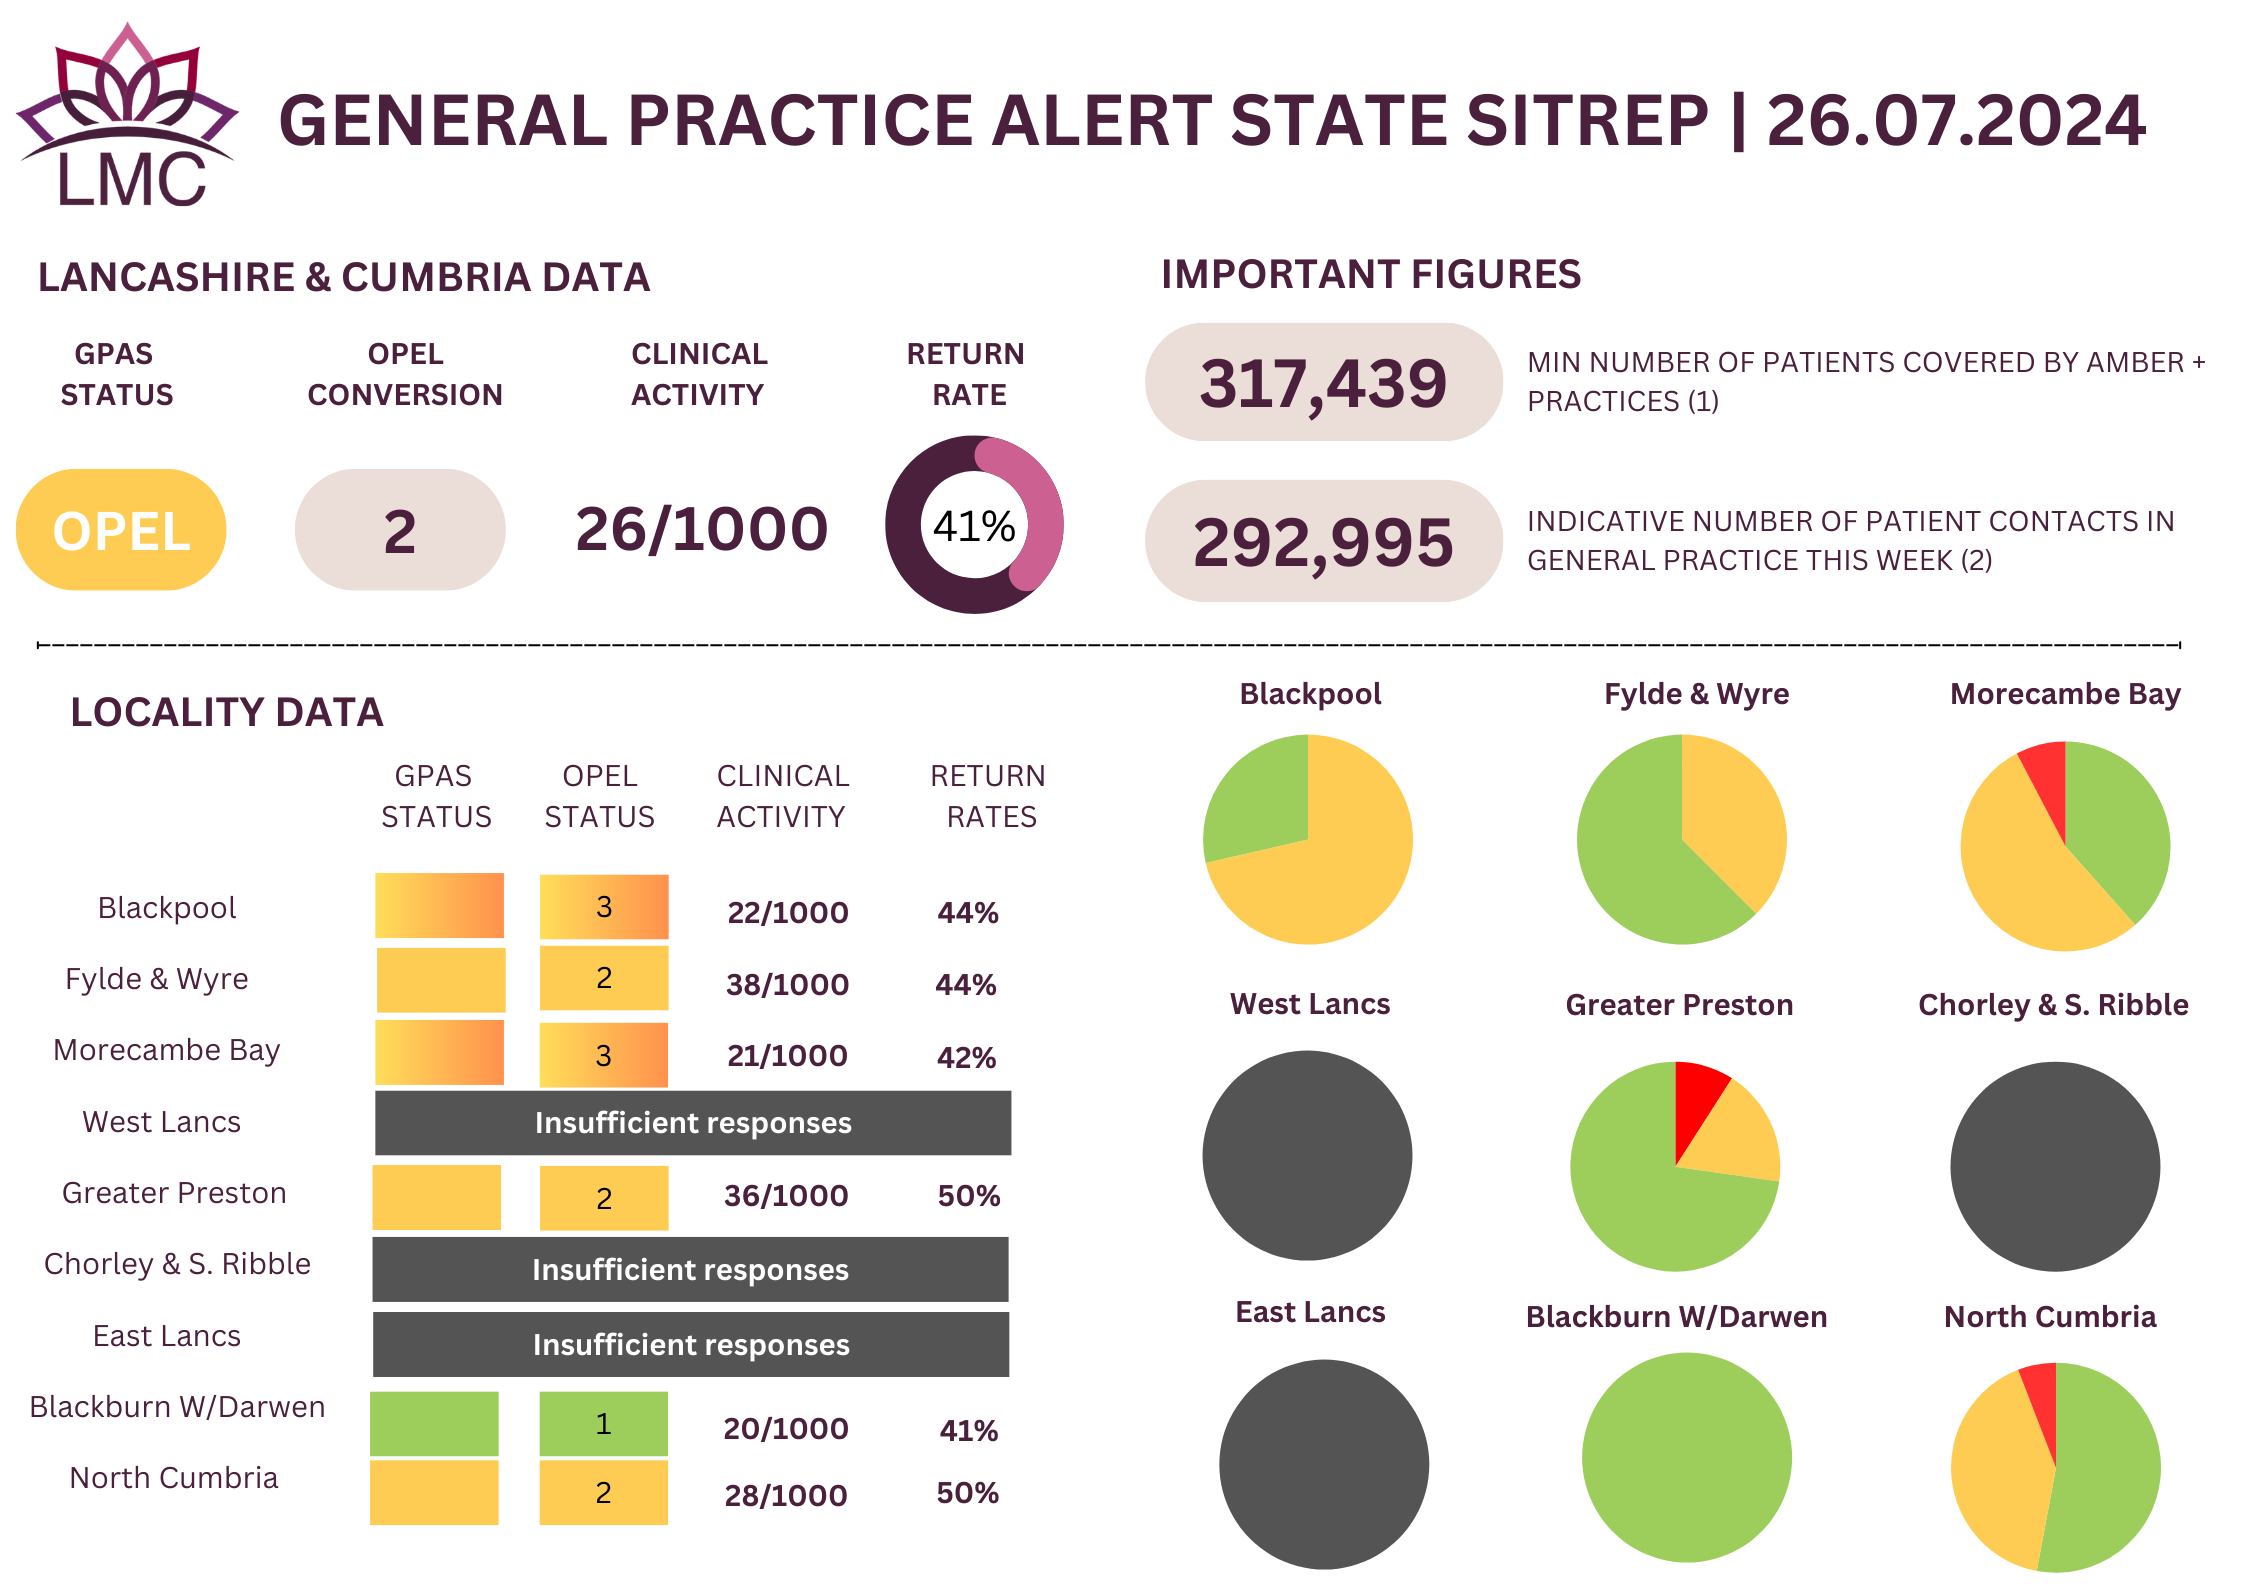 General Practice Alert State (GPAS) SITREP